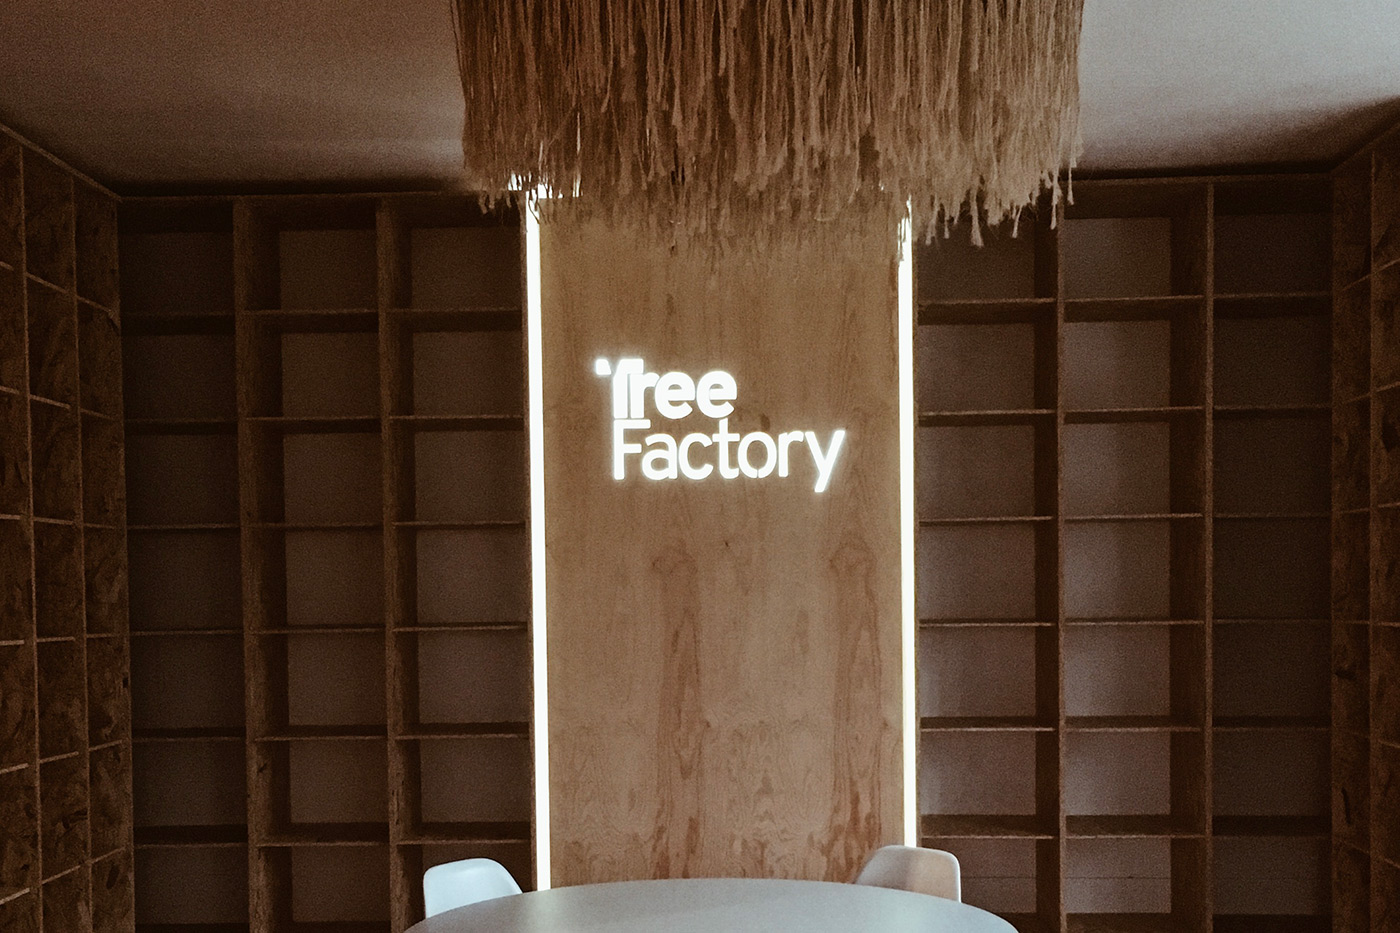 Dílna Tree Factory v roce 2019